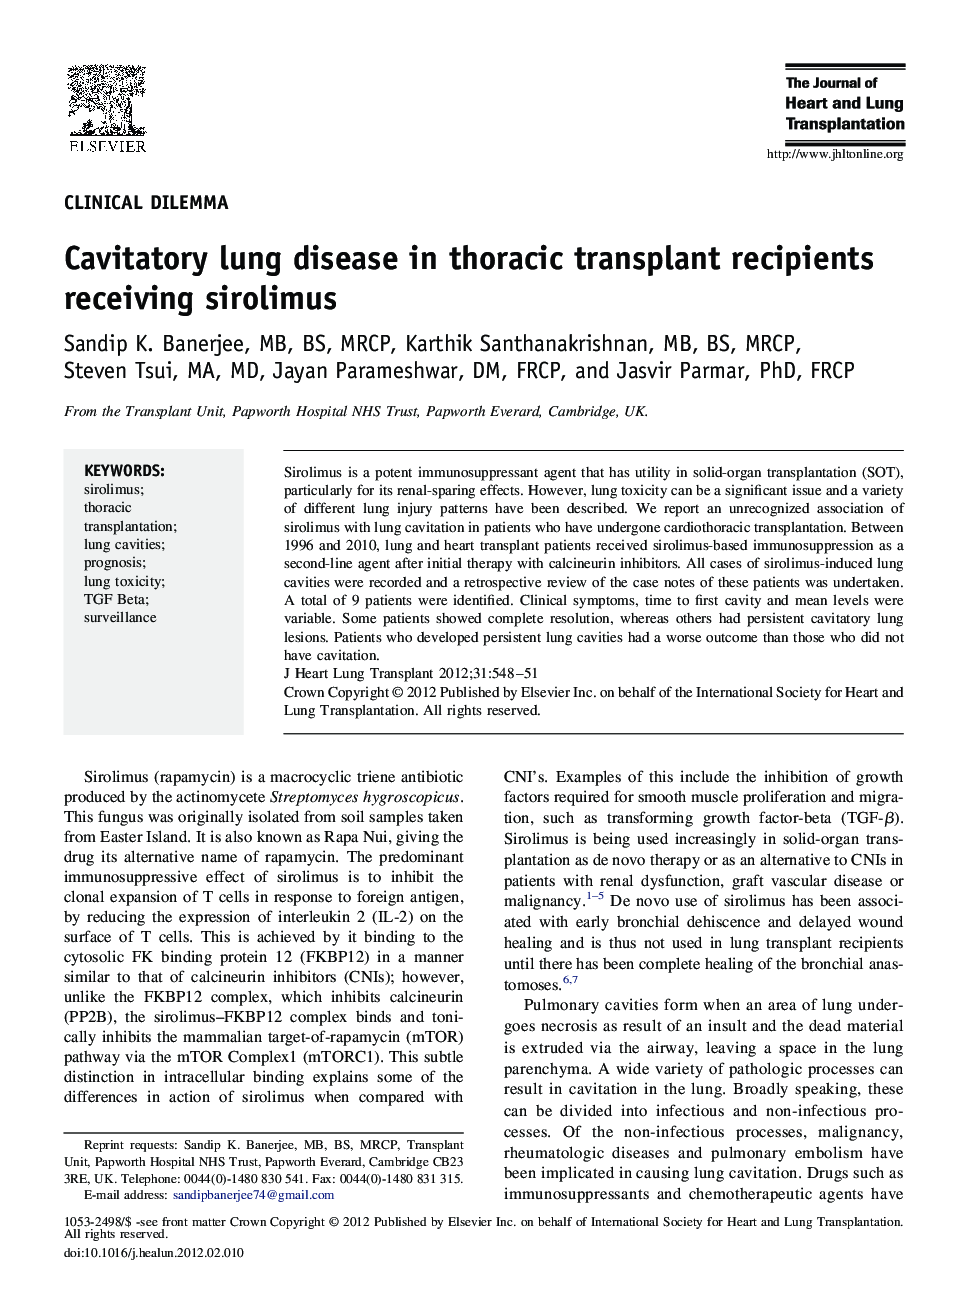 Cavitatory lung disease in thoracic transplant recipients receiving sirolimus